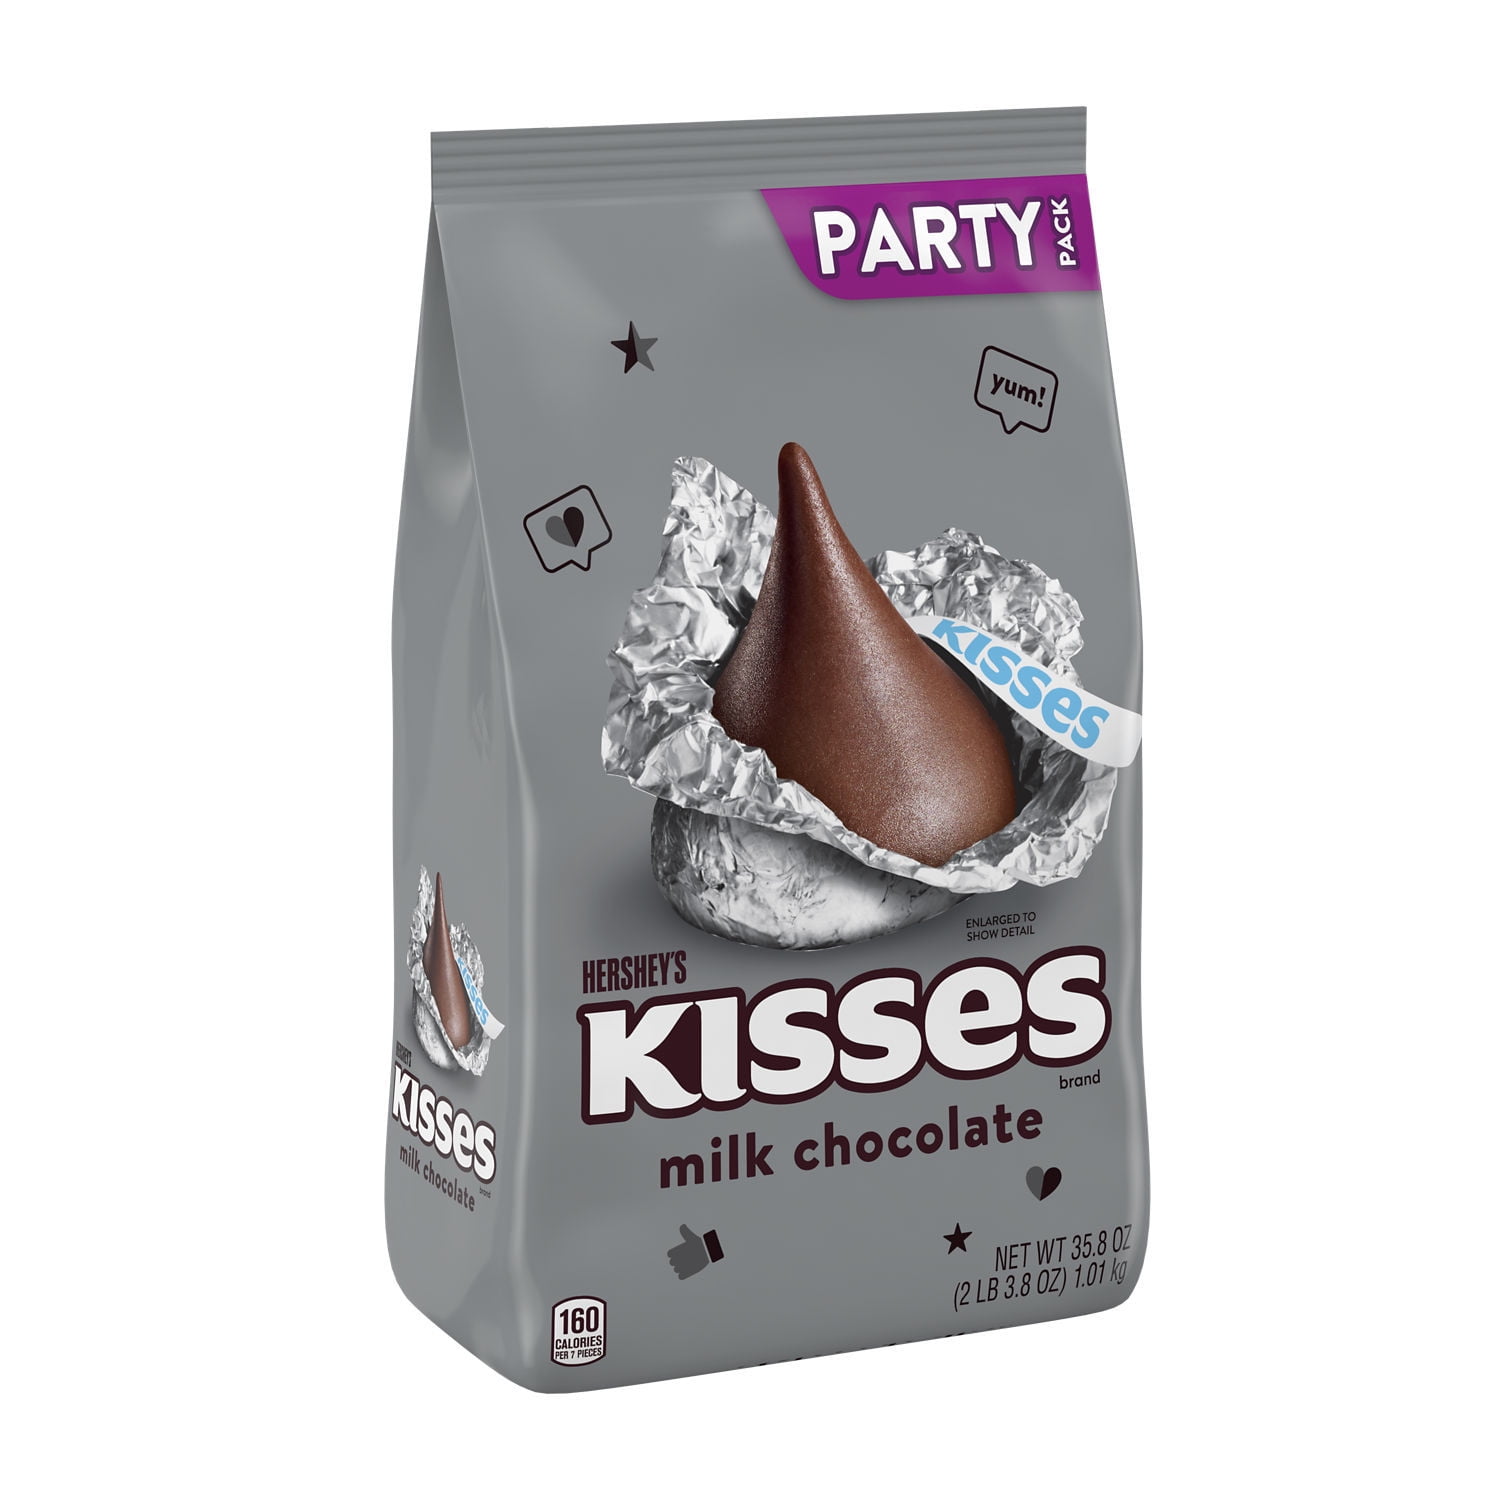 HERSHEY'S KISSES MILKLICIOUS Milk Chocolate Candy, 9 oz bag